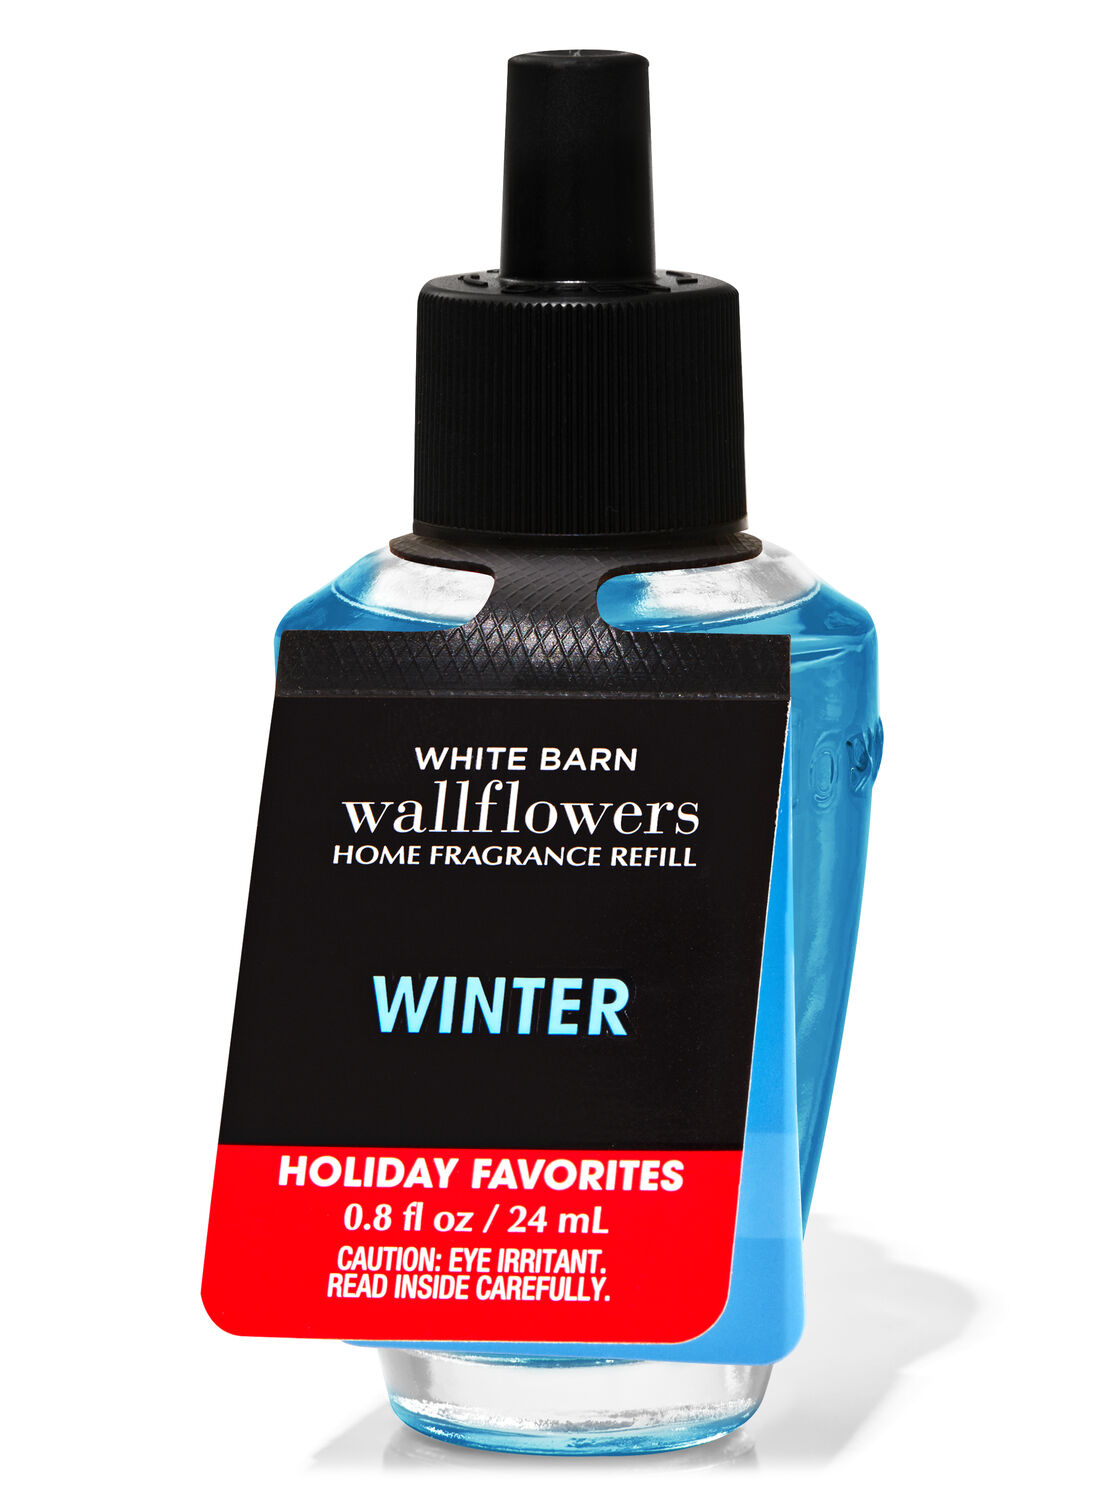 Bath & Body Works "WINTER" Wallflowers Home Fragrance Refills 